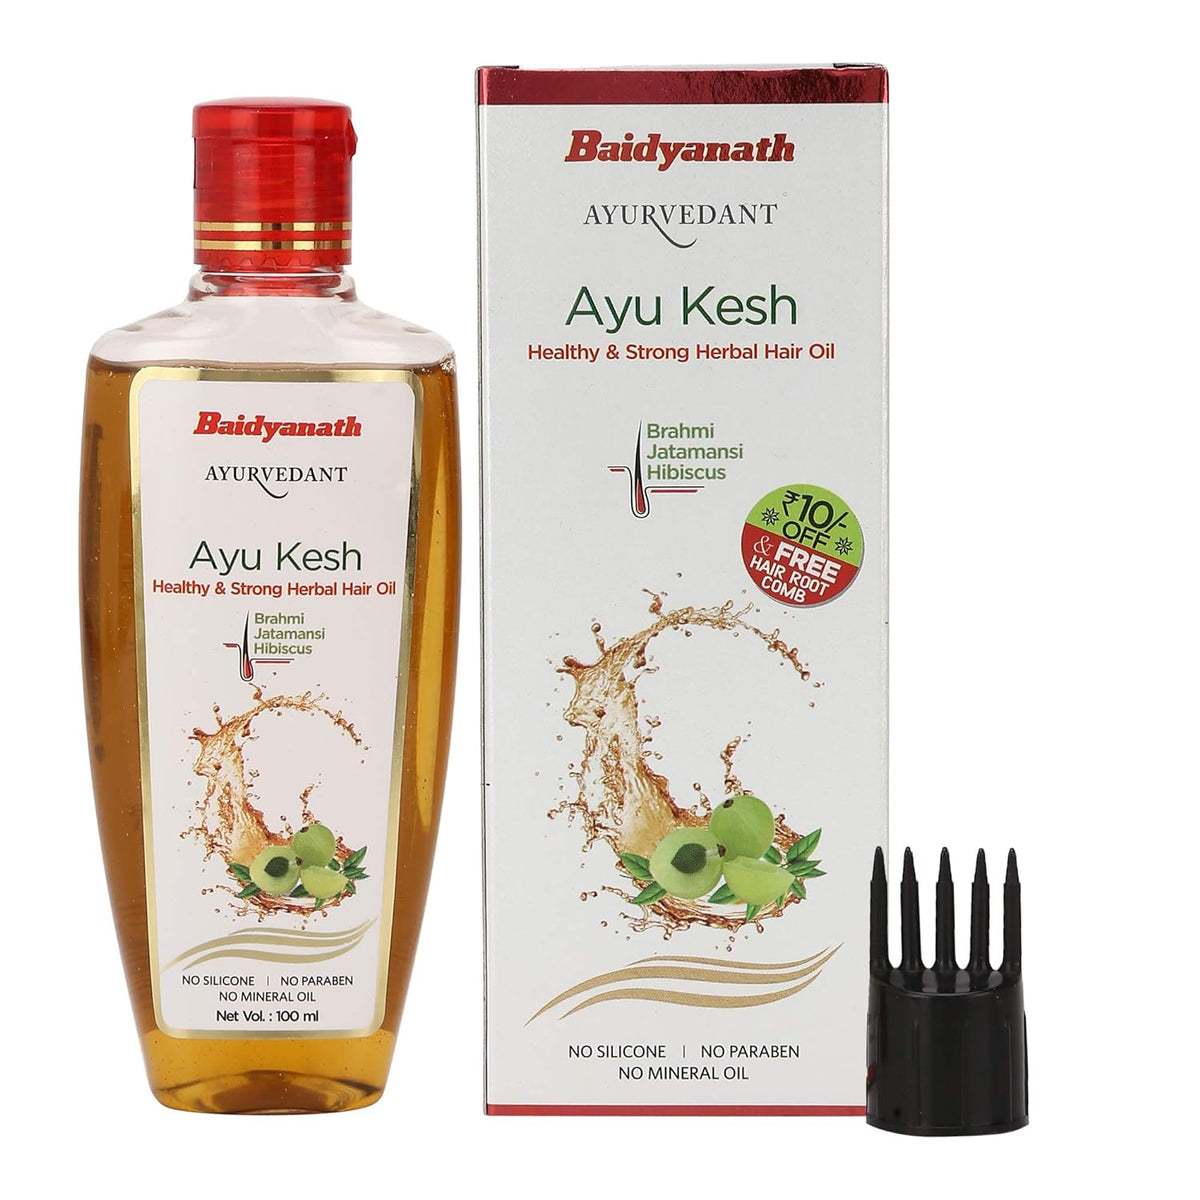 Baidyanath Ayurvedic (Jhansi) Ayurvedant Herbal Hair Oil Ayu Kesh Healthy & Strong Oil 100ml